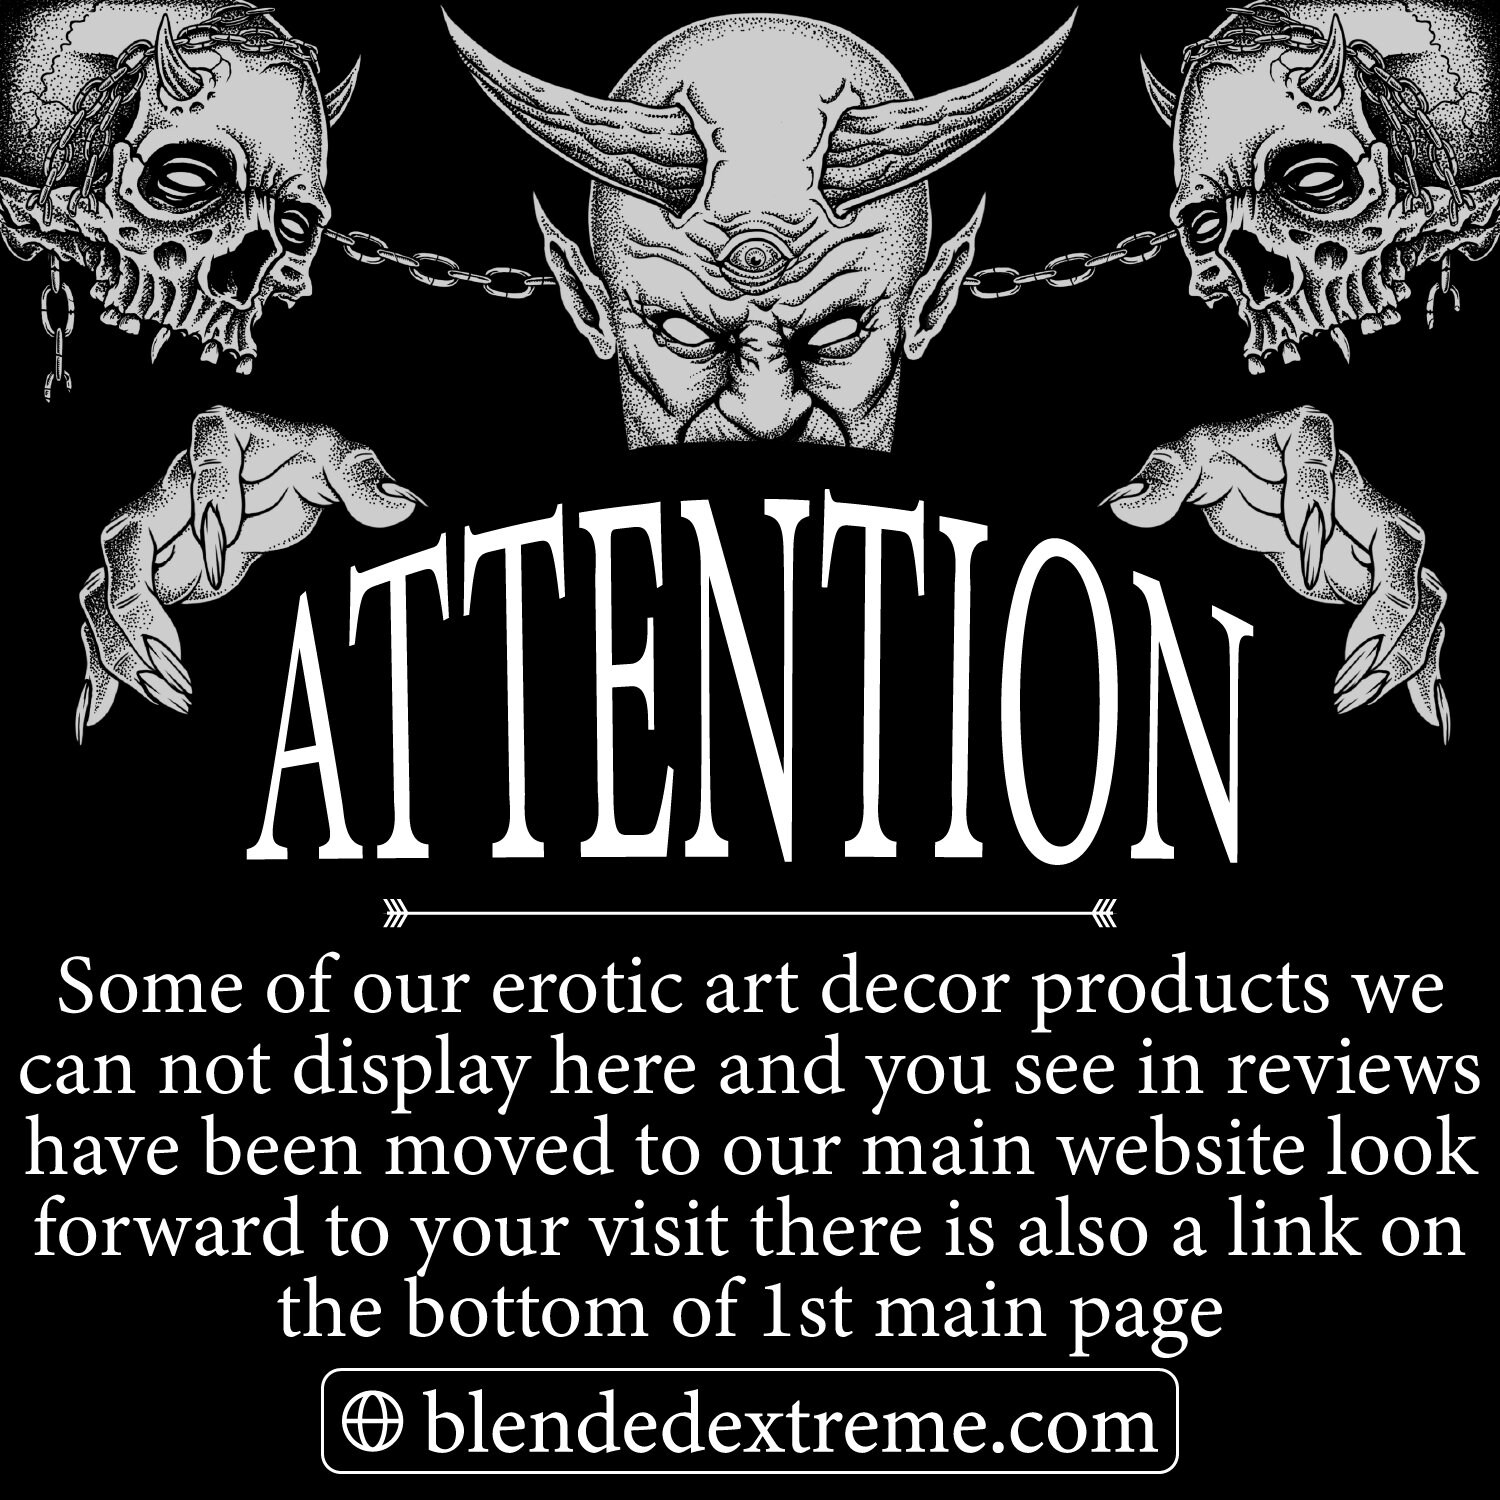 Discover Skull Satanic Pentagram Baphomet Erotic Demon Shrine 3 Piece Duvet Set Erotic Blue Pink-Baphomet Bed Set-Satanic Duvet-Baphomet Bedding-